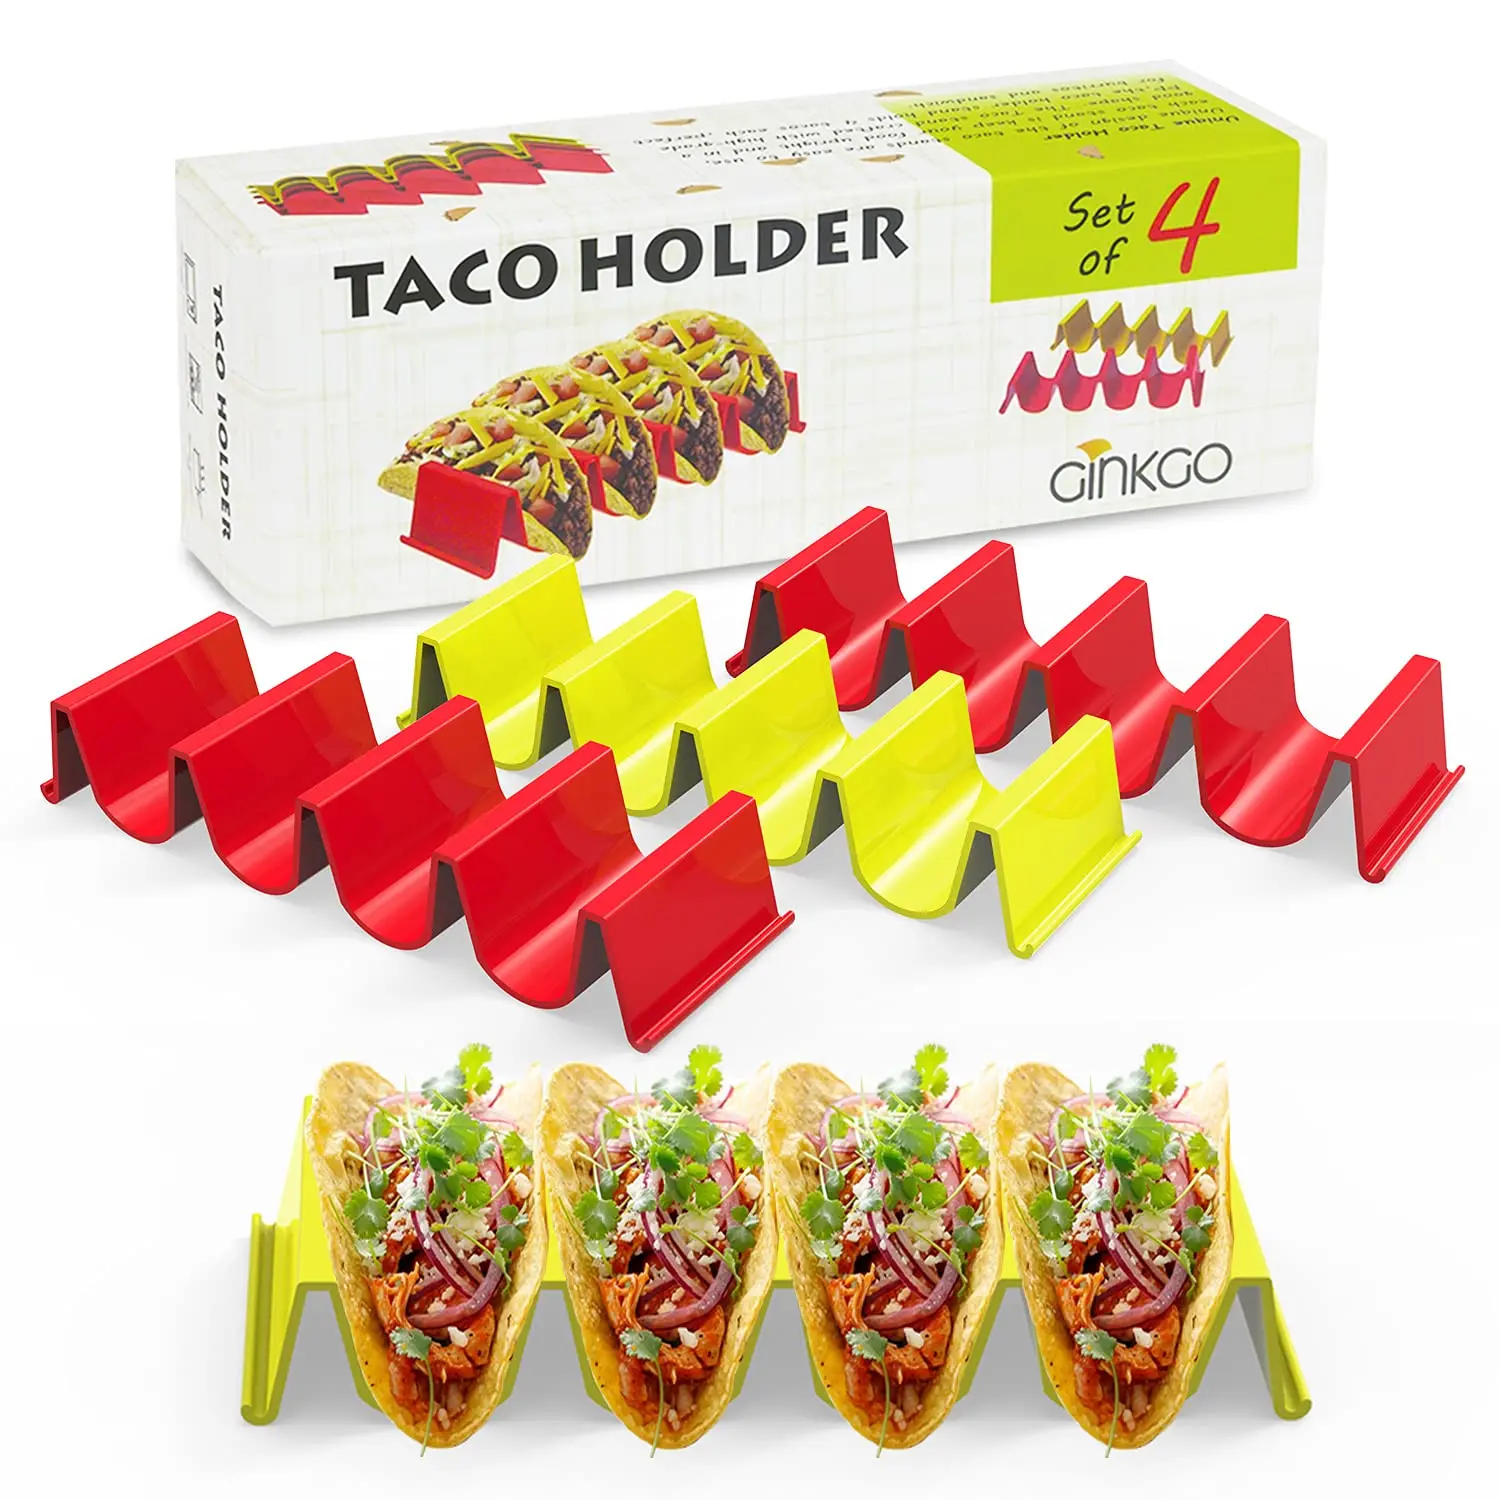 https://ae01.alicdn.com/kf/Sa6dfce9c4e524c769877075525e6dfb2K/Mexican-Tacos-Pancake-Shelf-Holder-Tortilla-Wave-Shape-Tray-Holder-Stainless-Steel-Taco-Holders-4-Packs.jpg